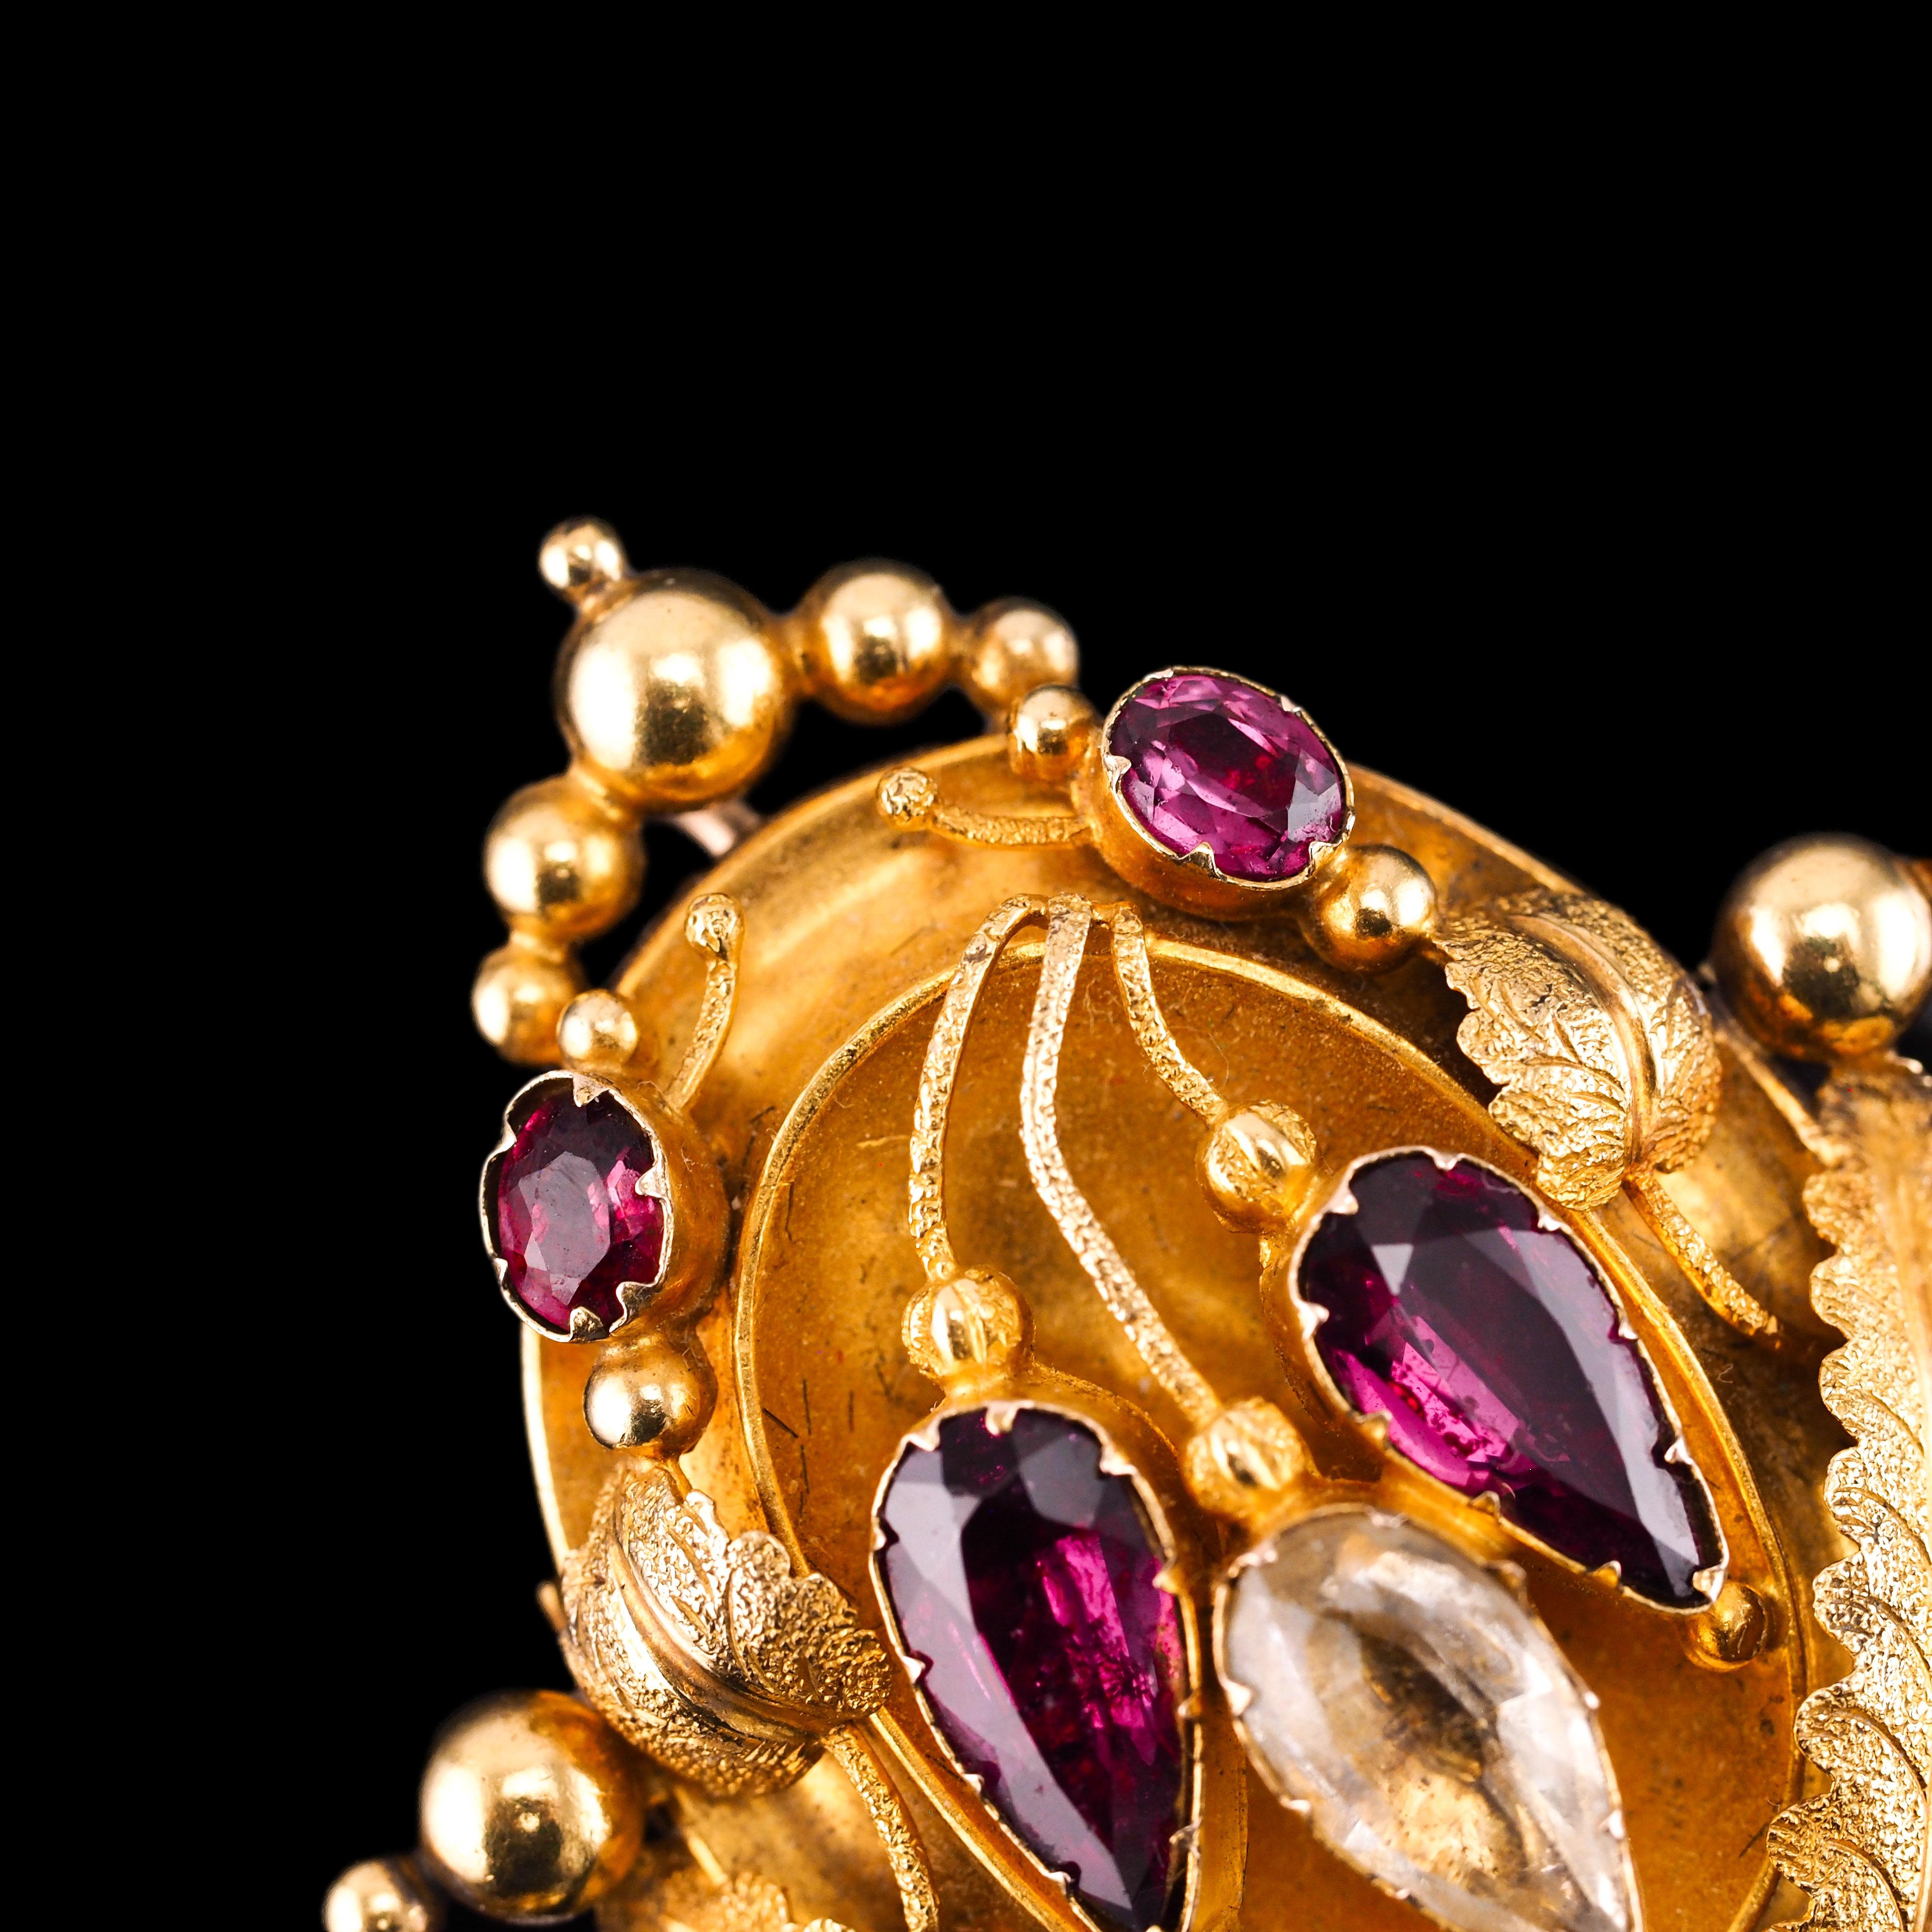 Antique 18K Gold Brooch Pendant & Earrings Garnet & Chrysoberyl - c.1870 13